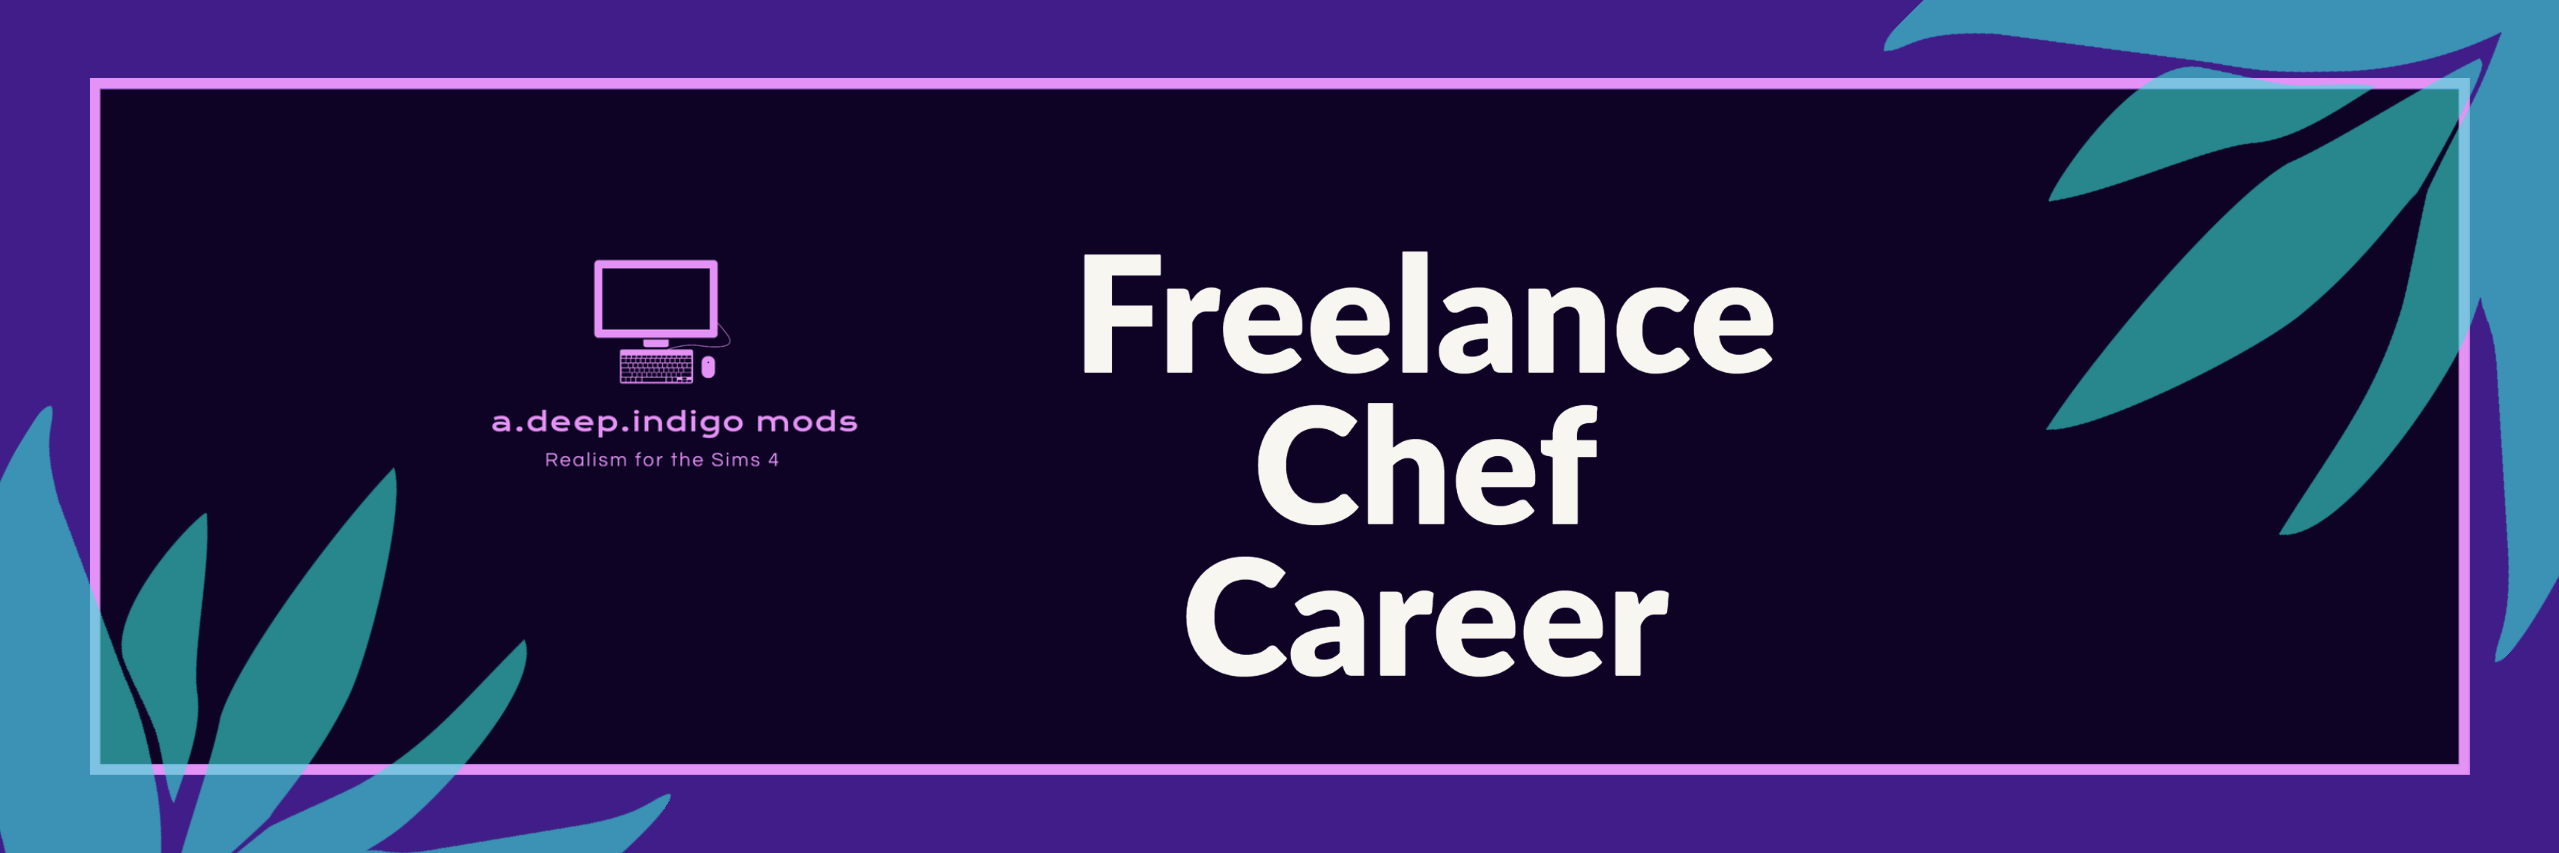 Freelance Chef